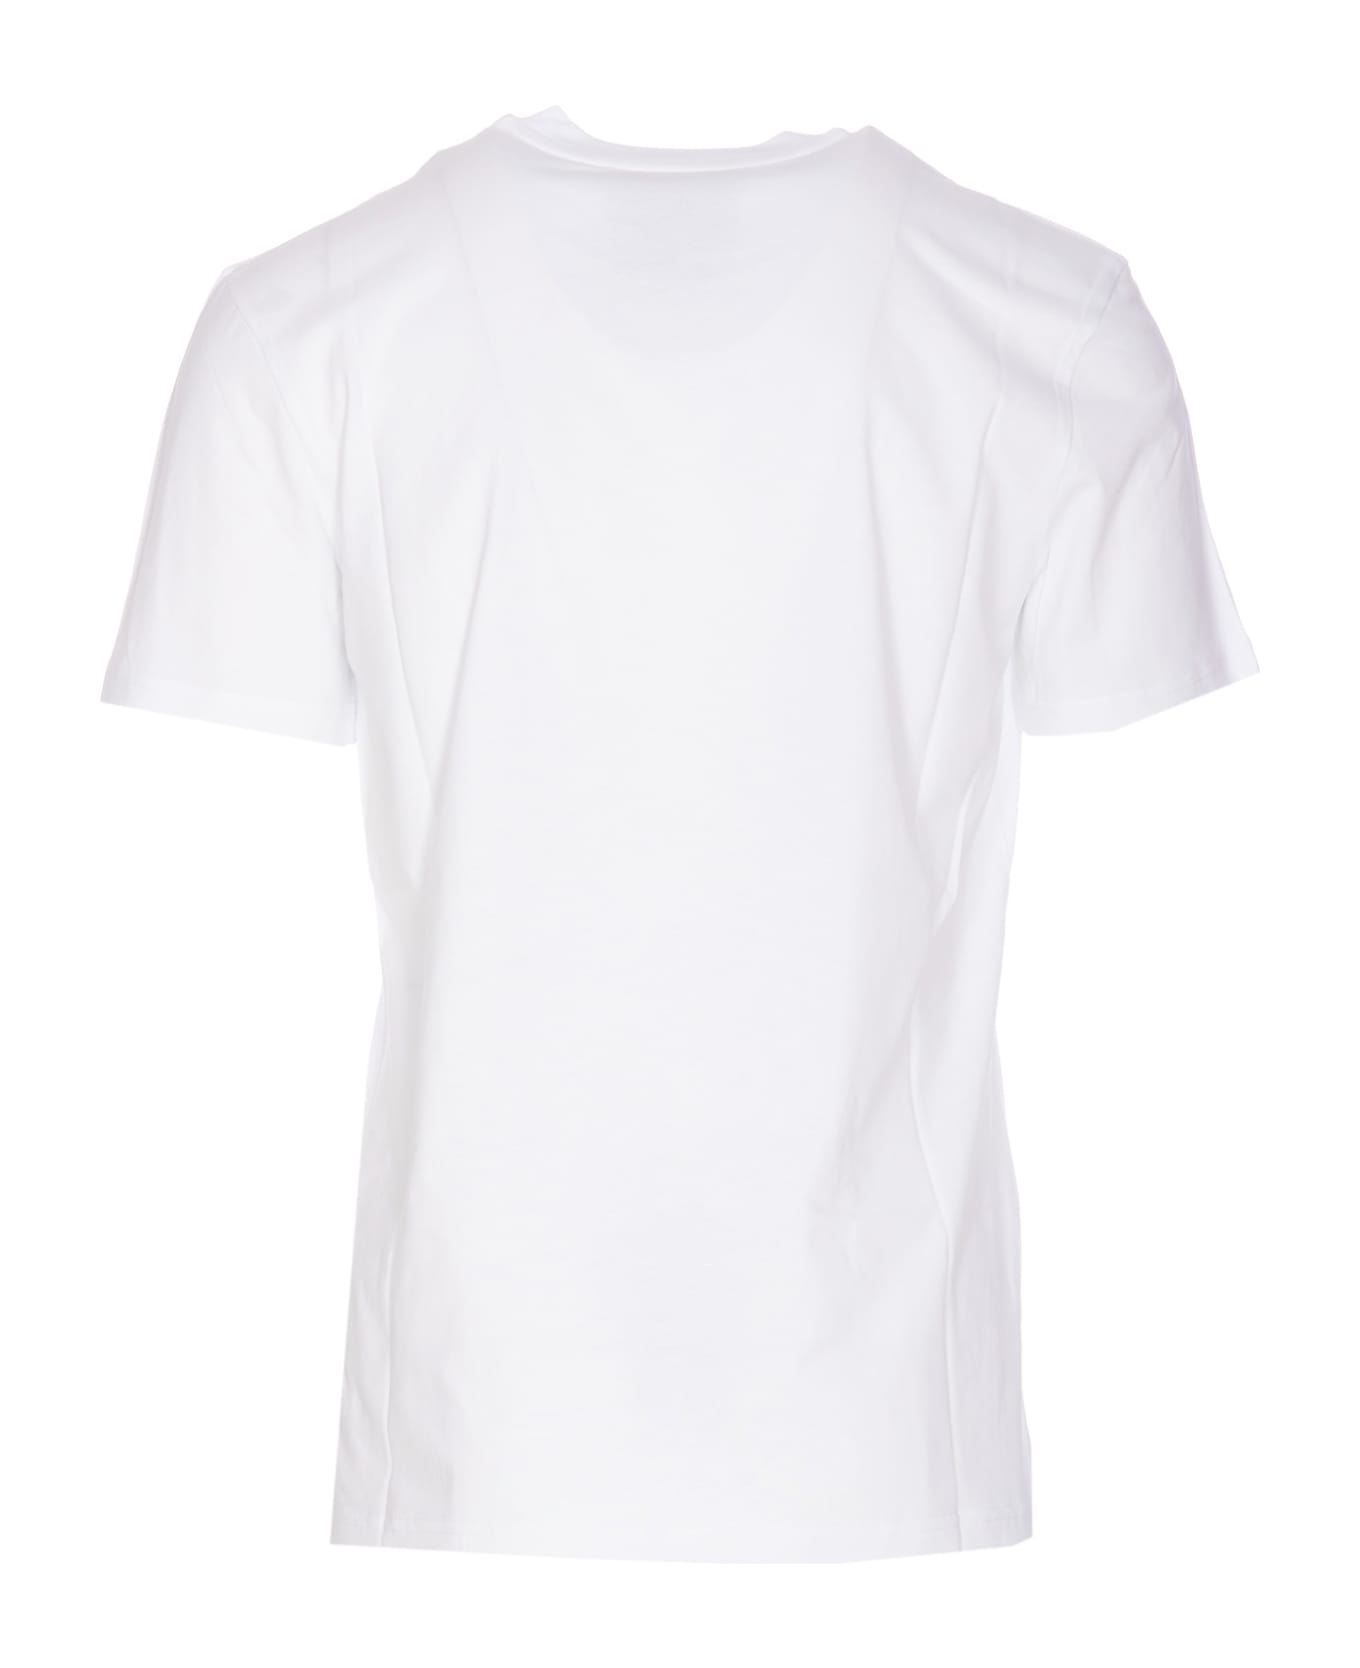 Moschino Archive Print T-shirt - White